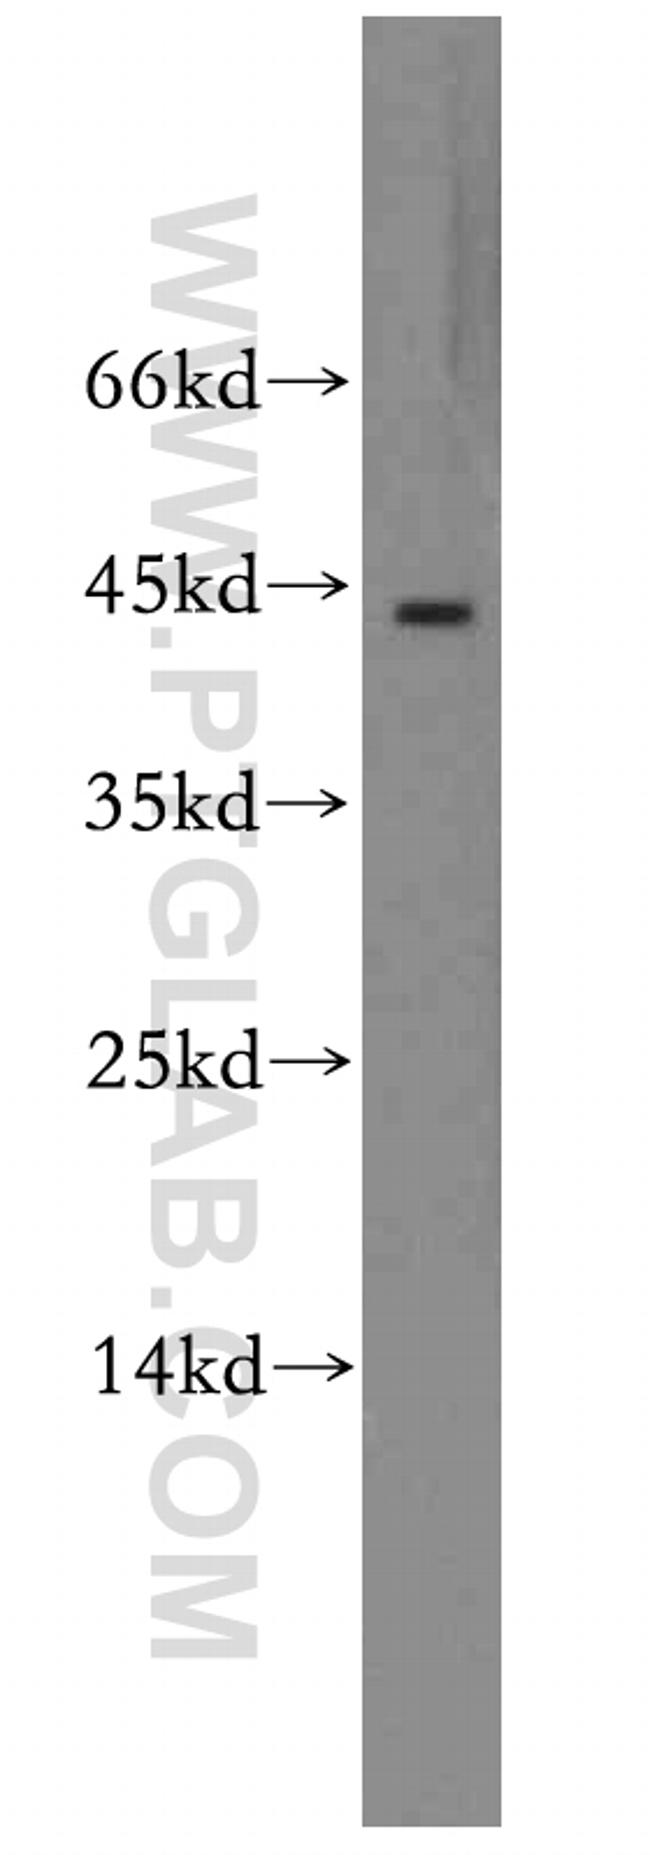 RGS5 Antibody in Western Blot (WB)